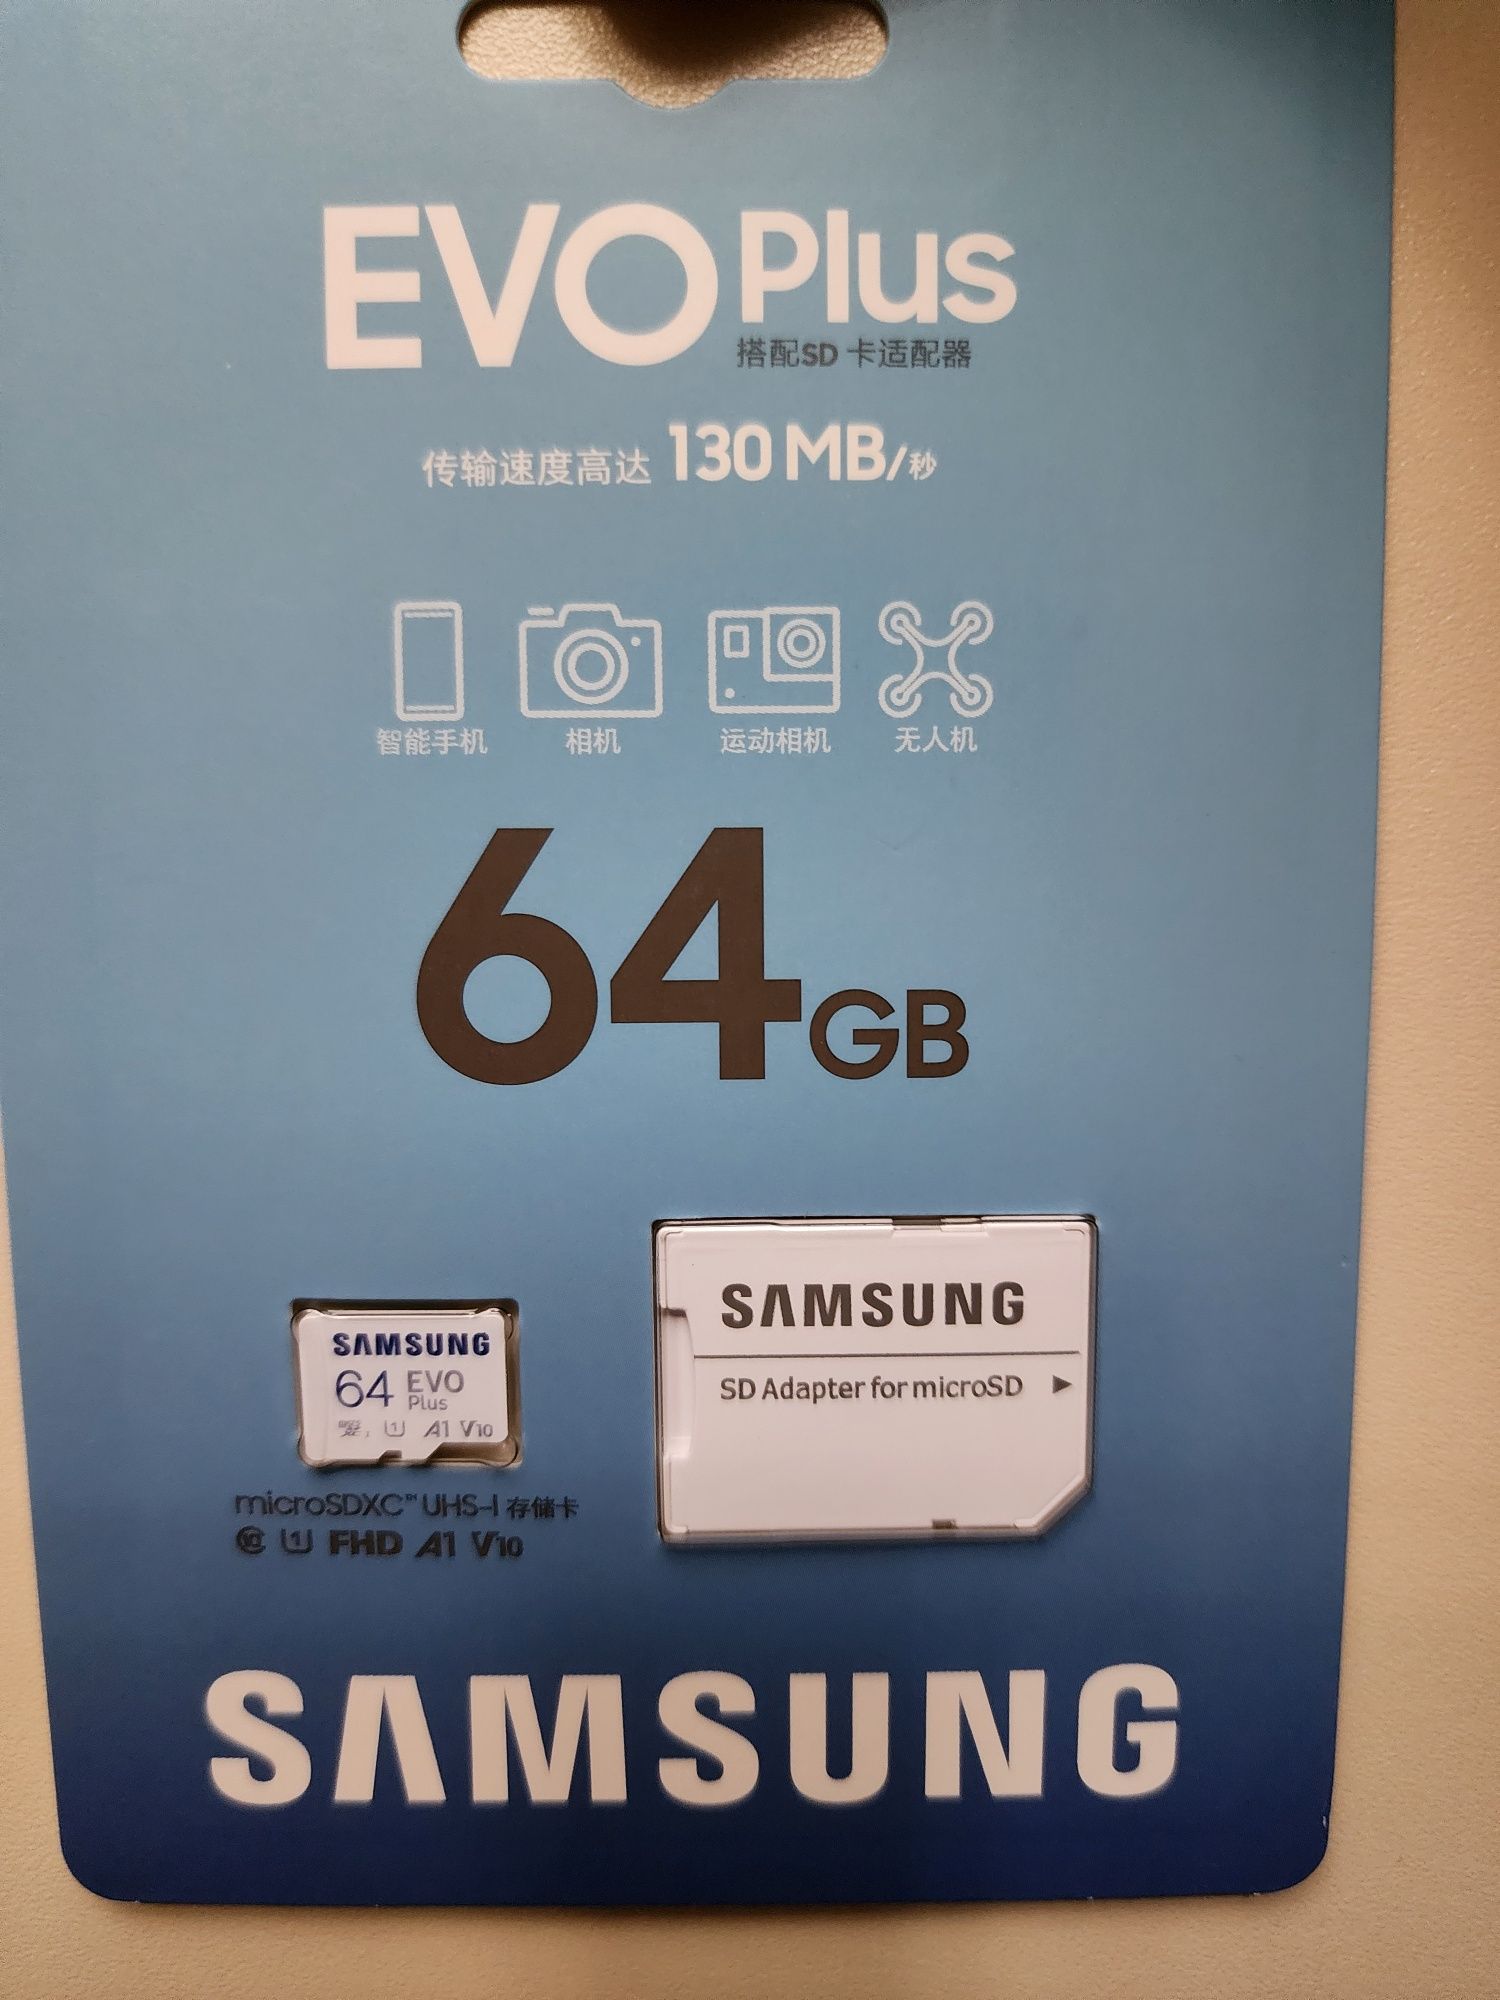 Samsung EvoPlus 130MB/s